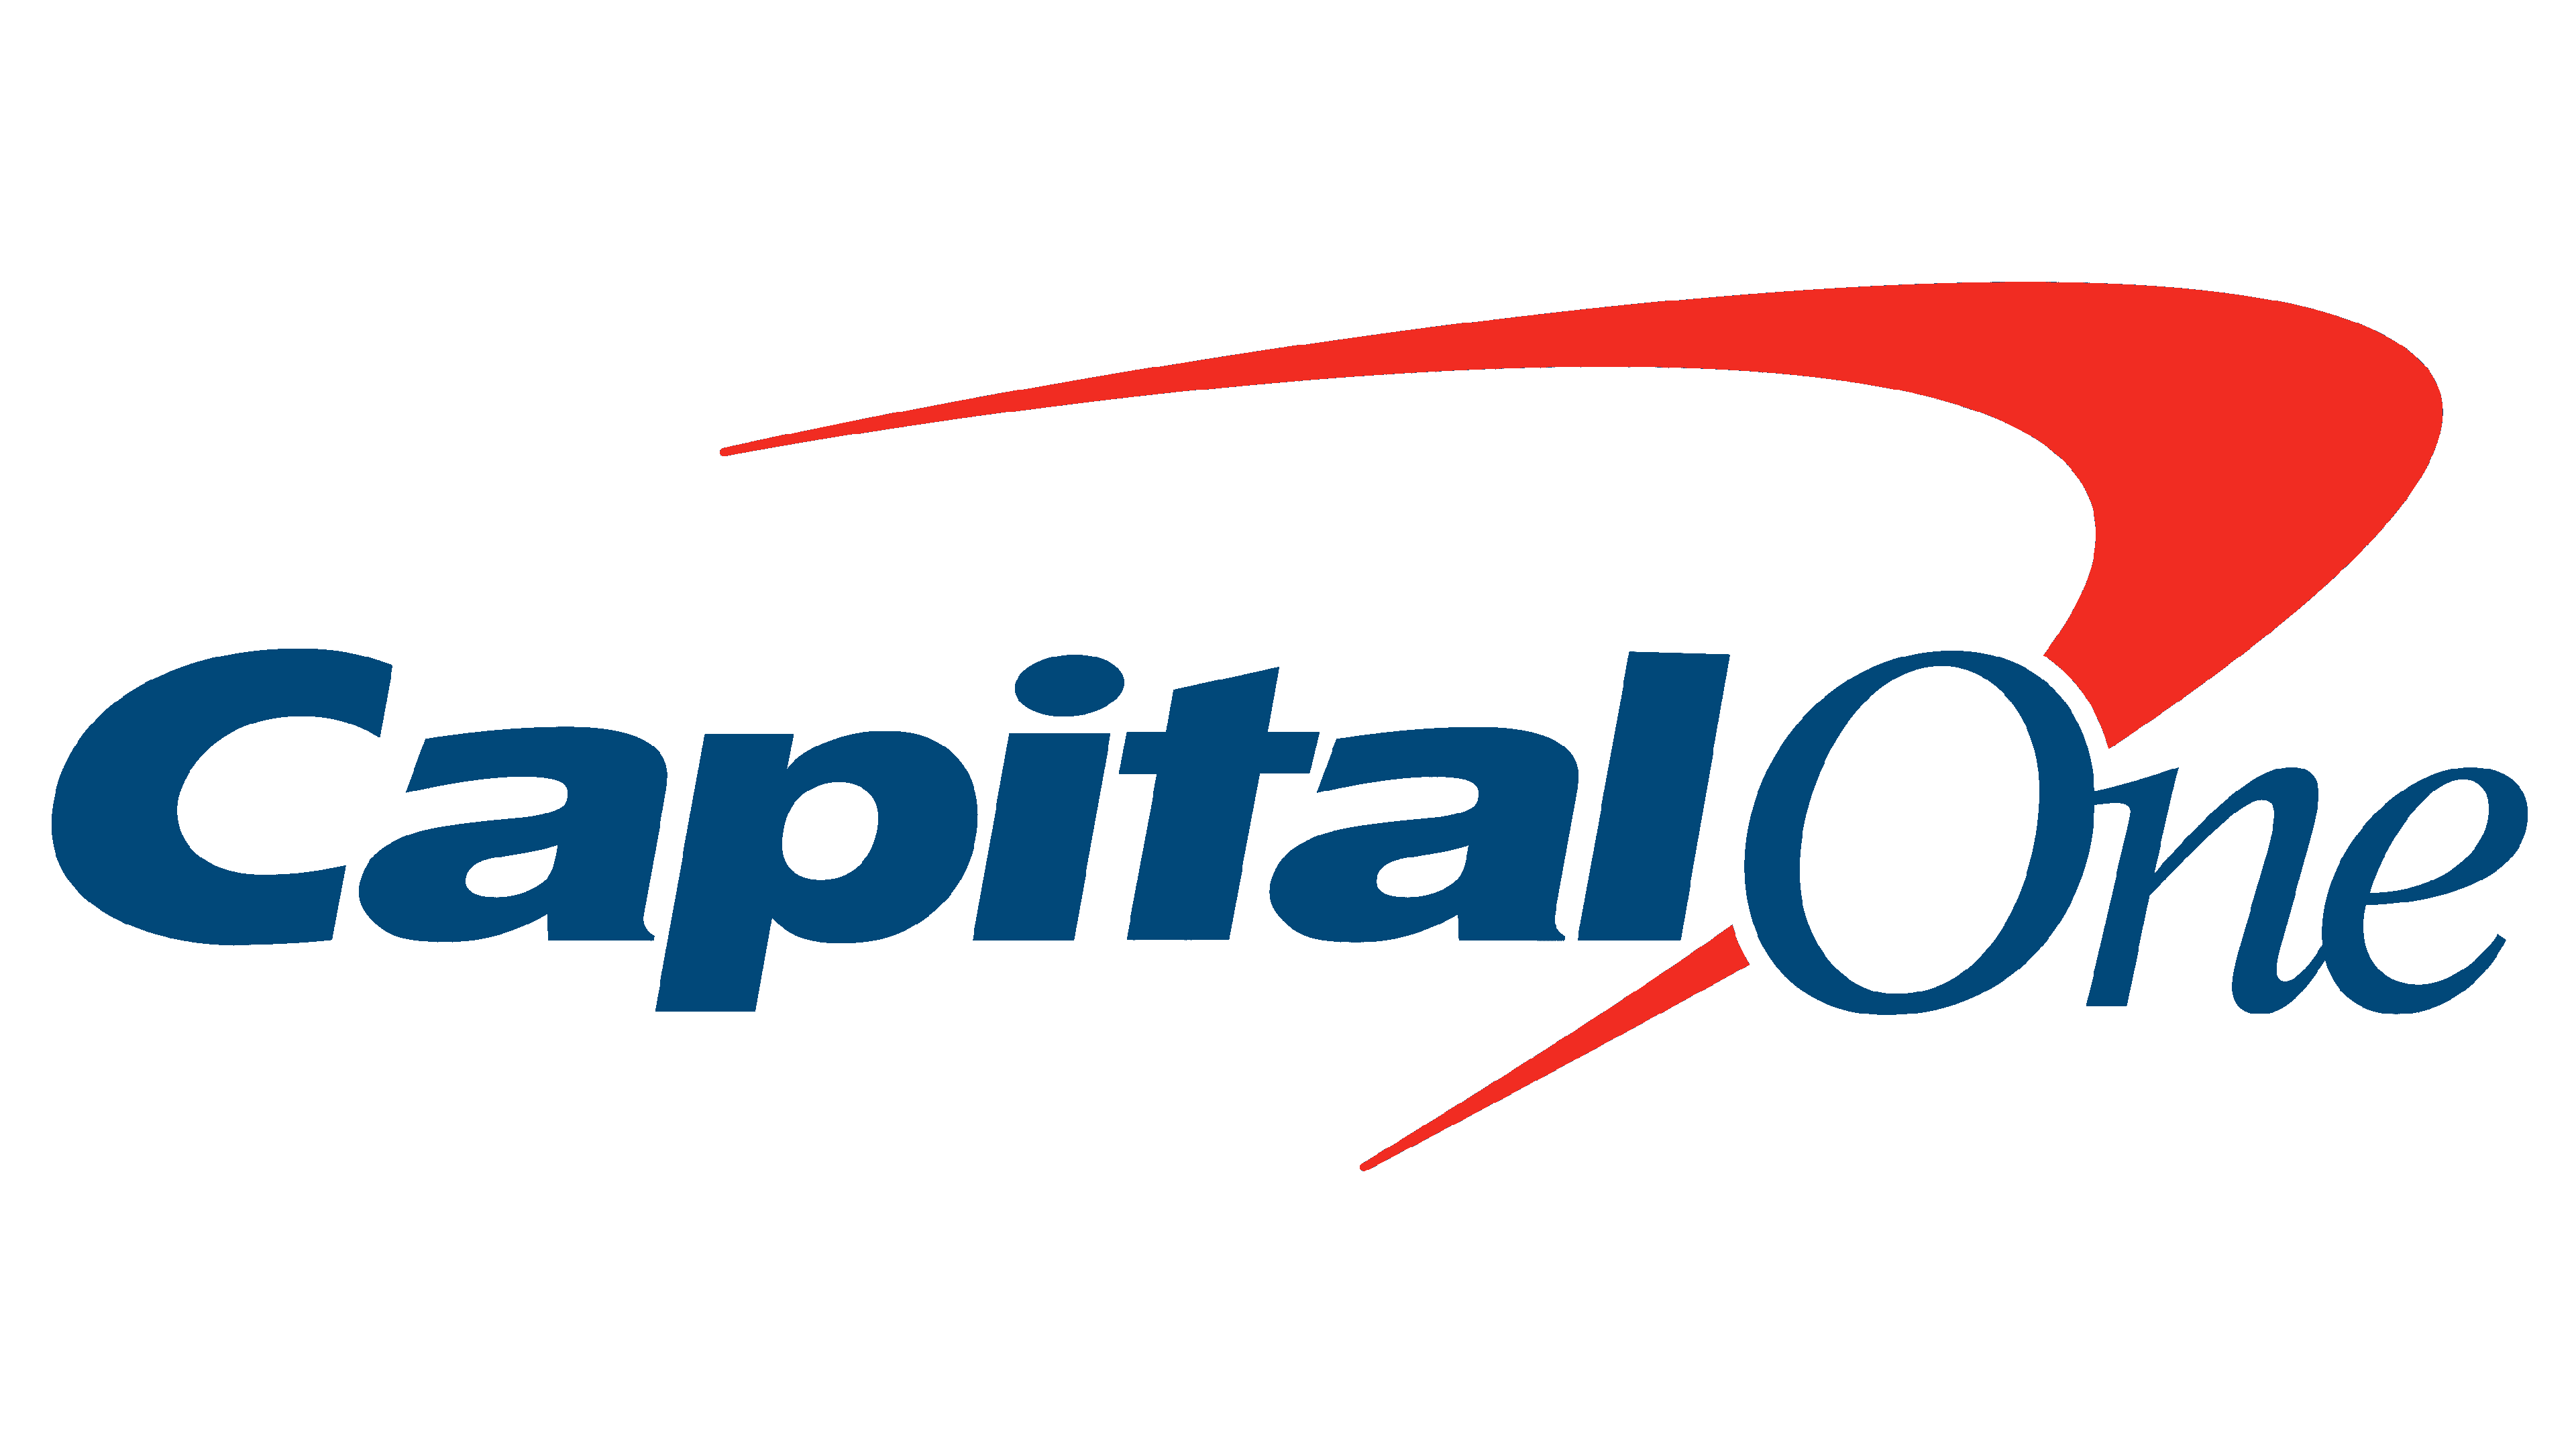 Capital_One_Image